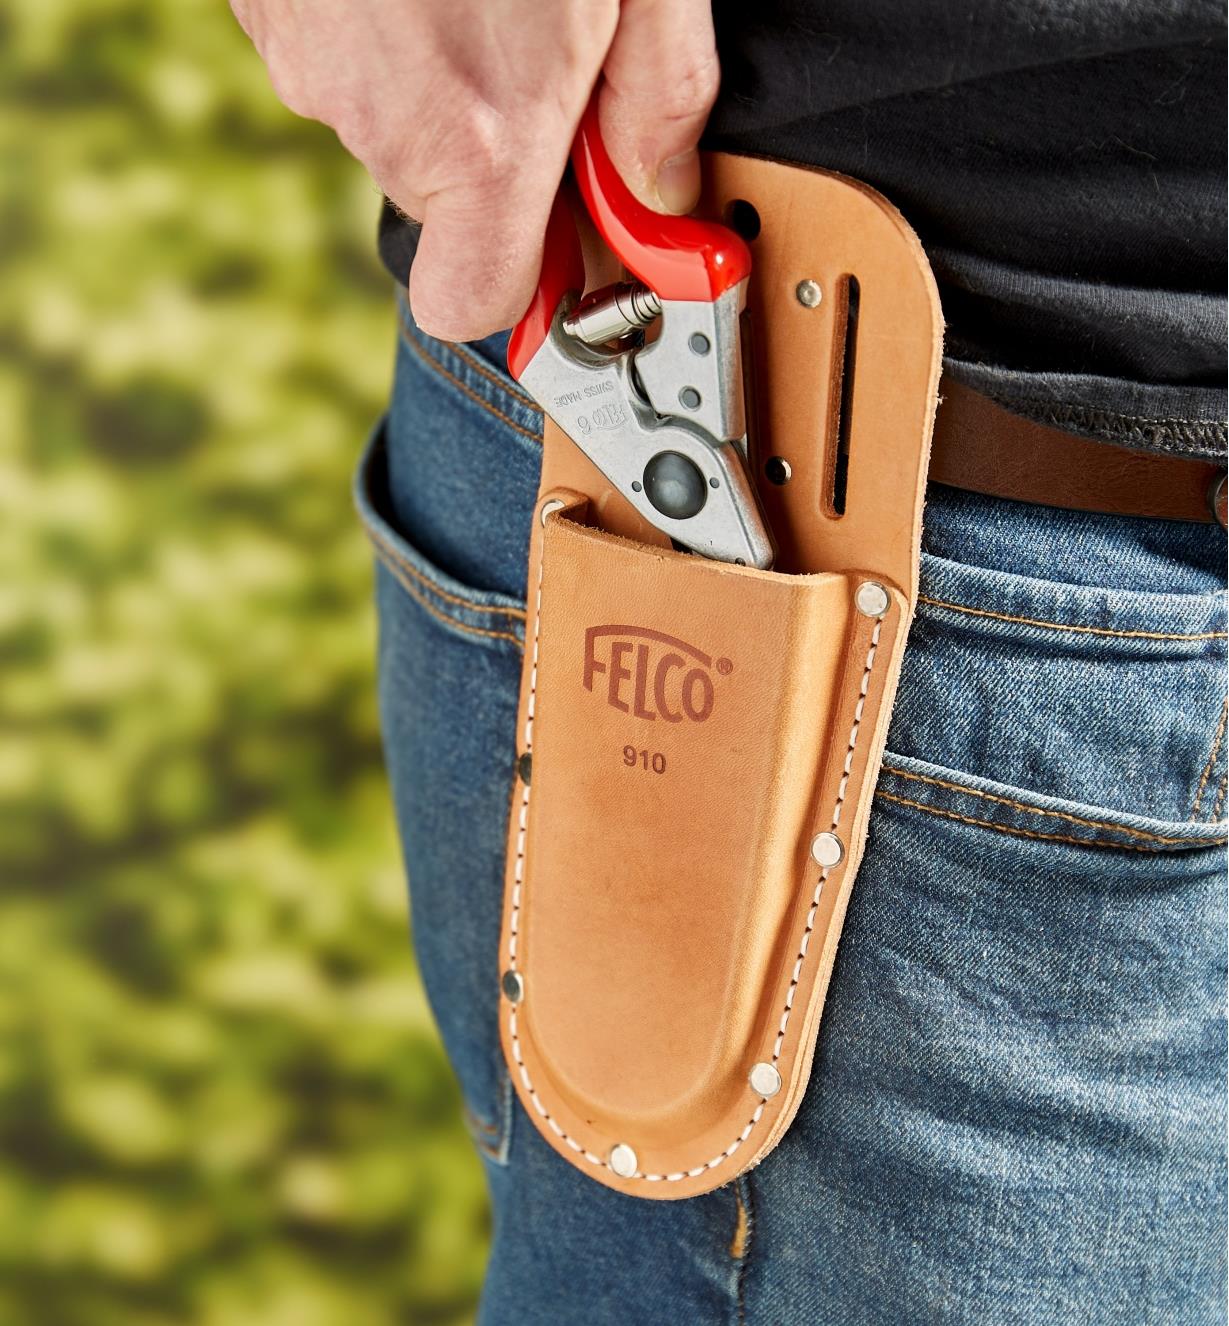 A gardener slips a Felco hand pruner into a pruner holster worn on the hip